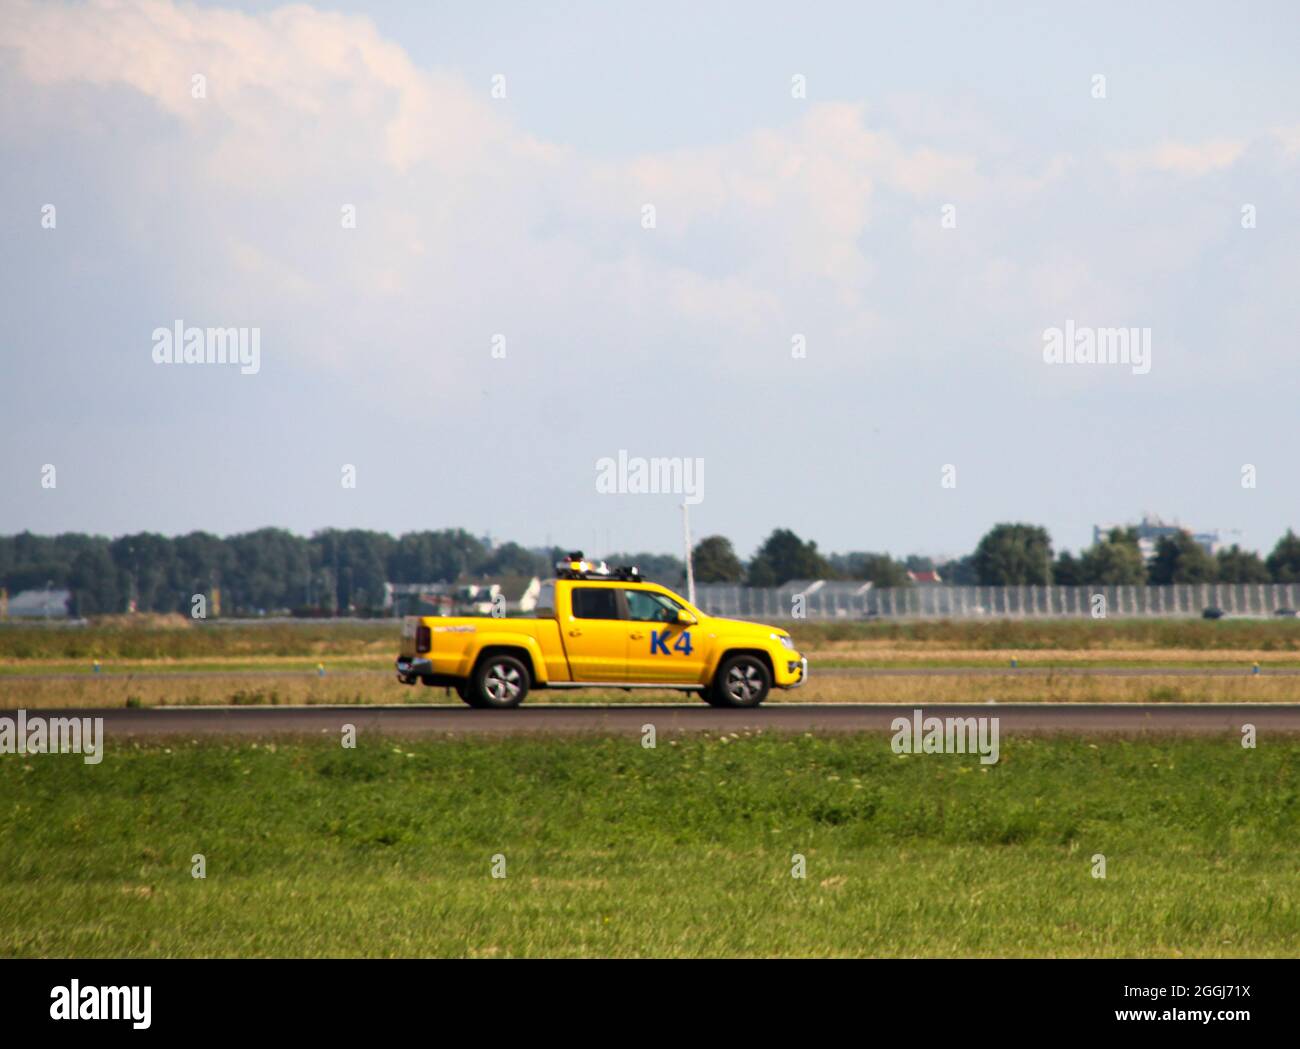 K4 bird control vehicle at Polderbaan 18R-36L of Schiphol Amsterdam Airport the Netherlands Stock Photo